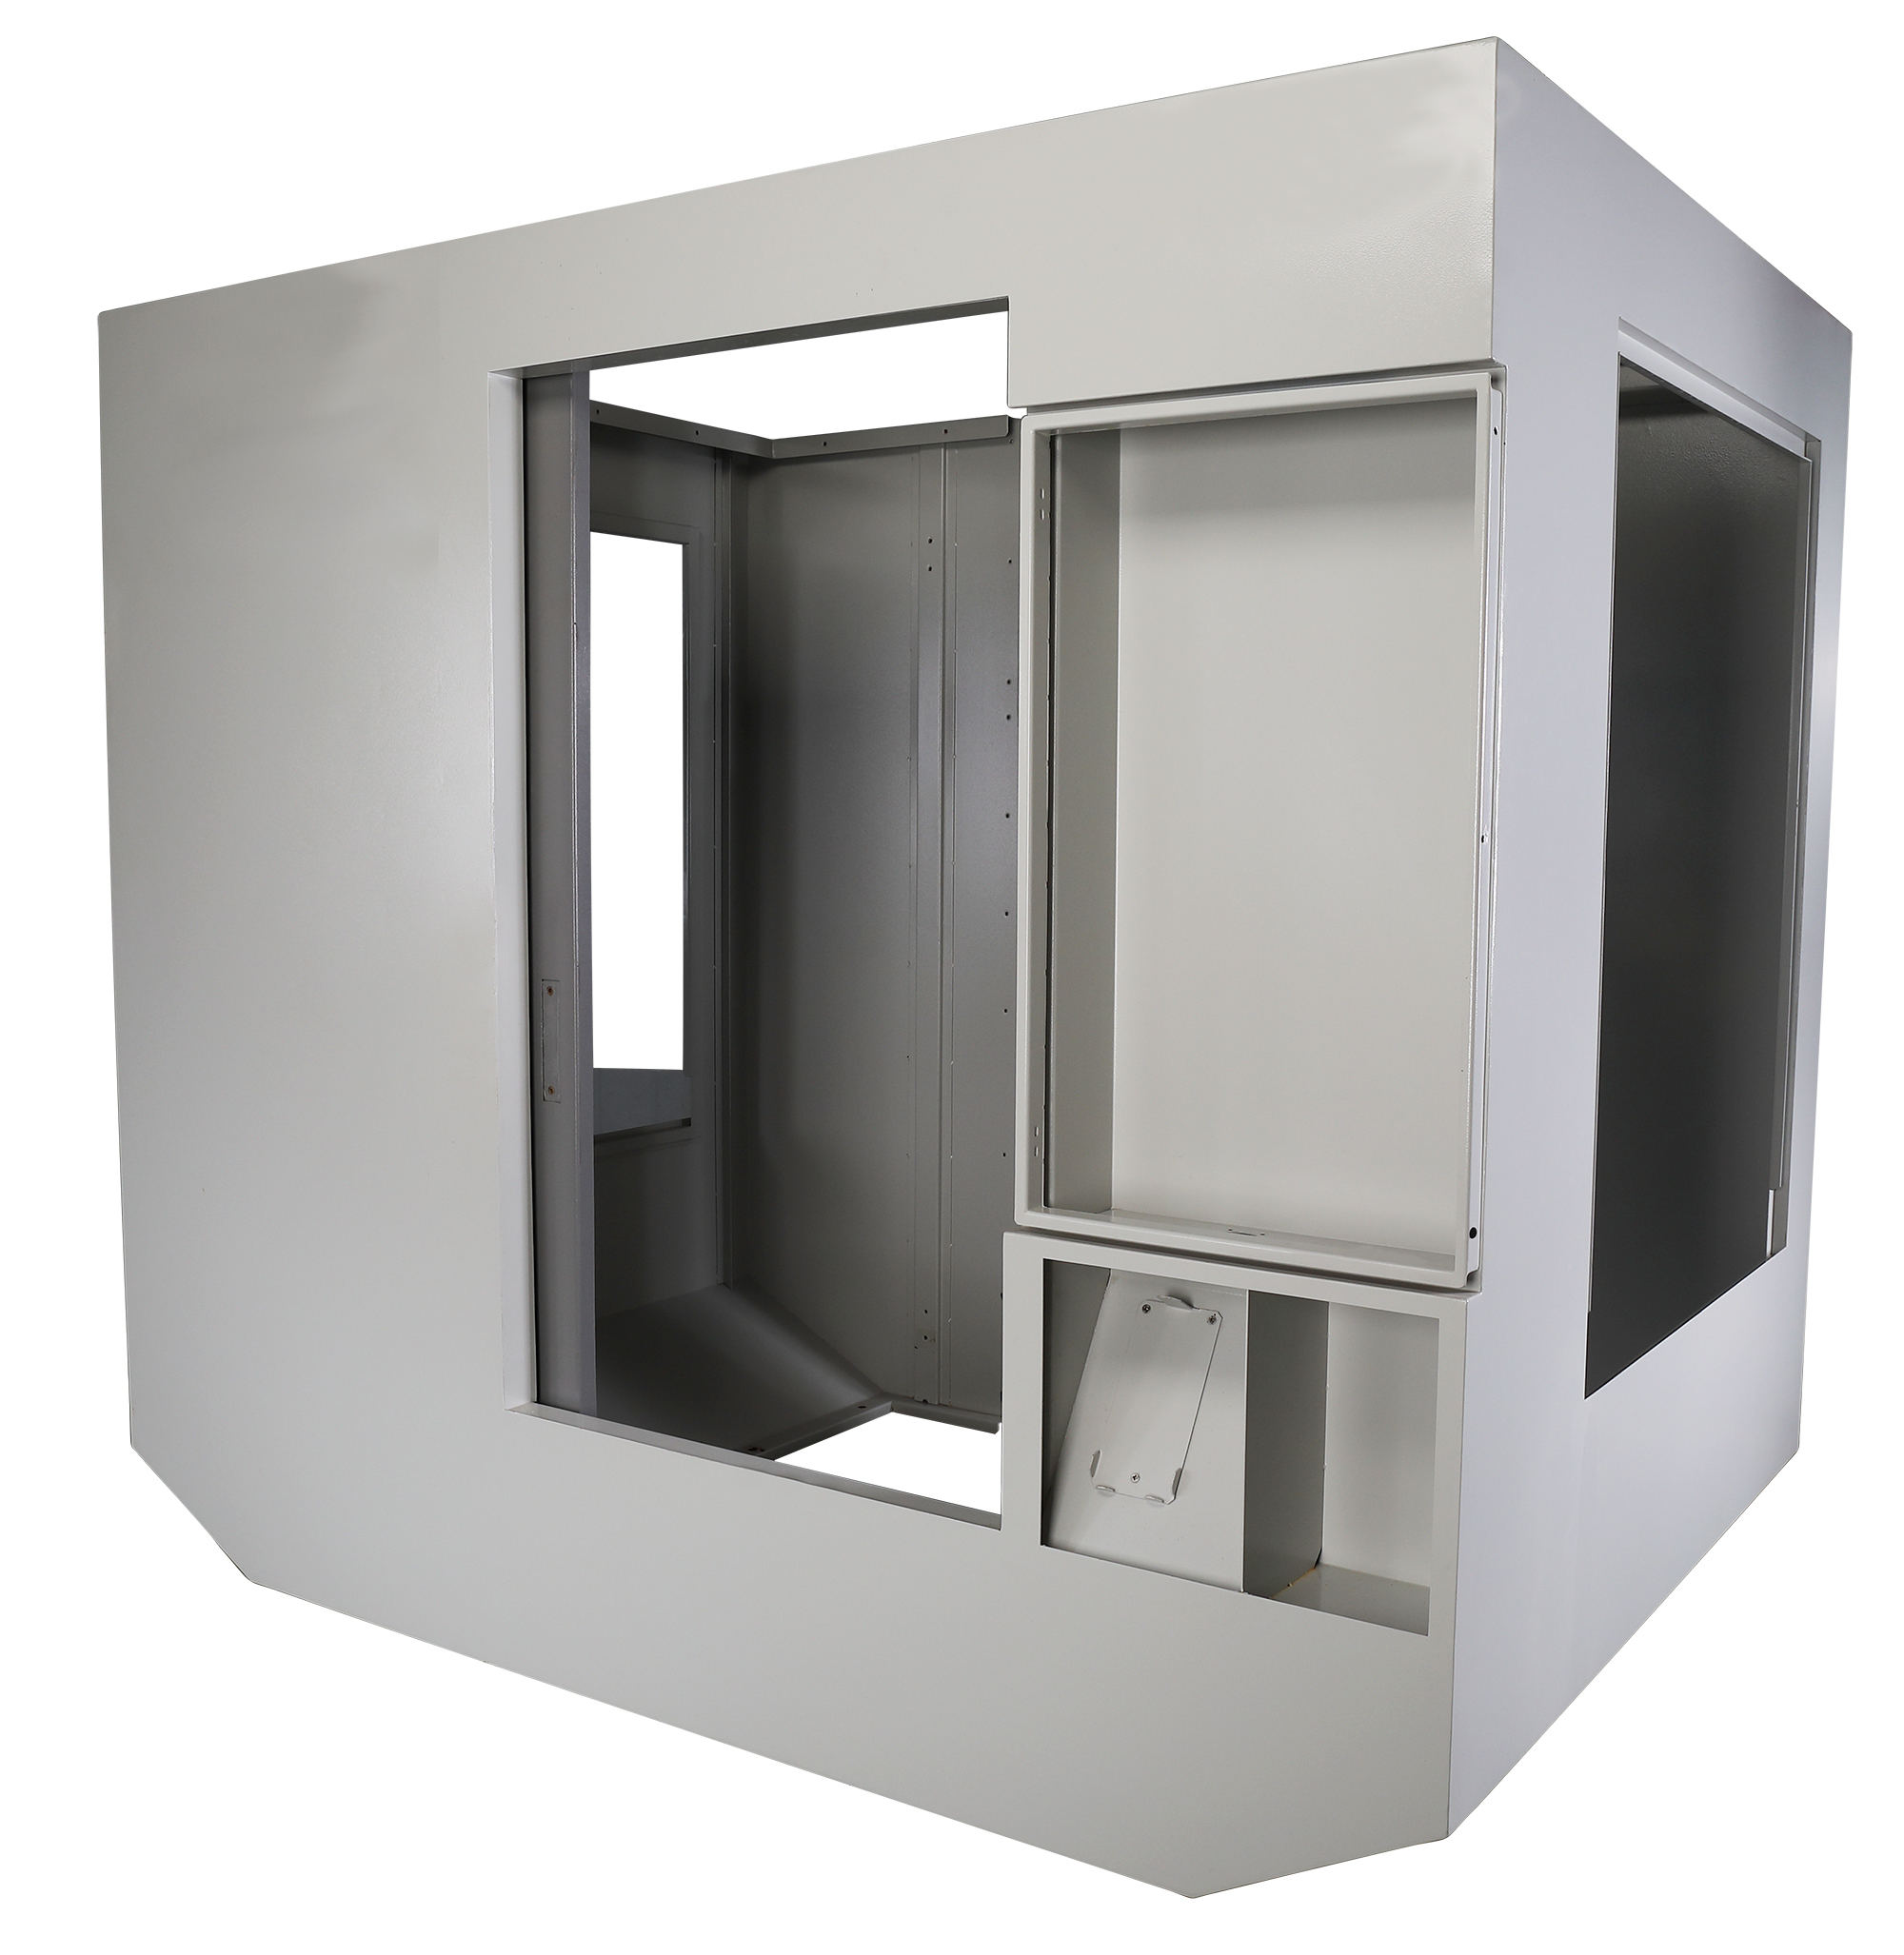 Matrix cabinet for storing telecommunication equipment